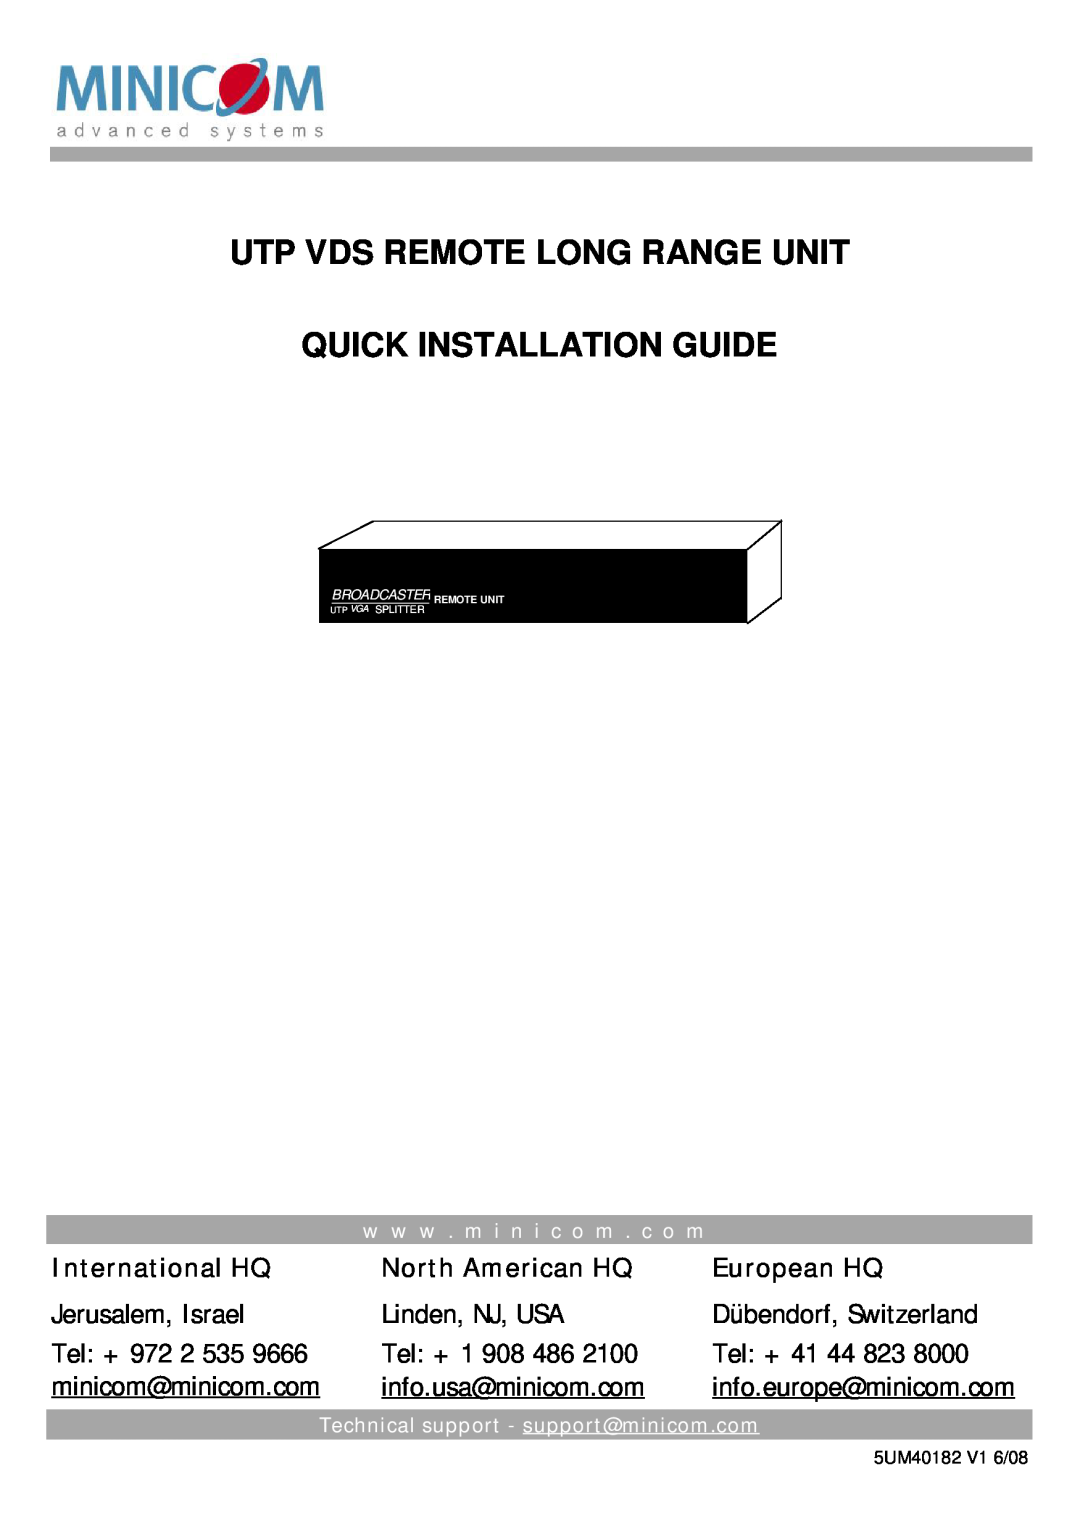 Minicom Advanced Systems UTP VDS manual Utp Vds Remote Long Range Unit, Quick Installation Guide, International HQ, Tel + 